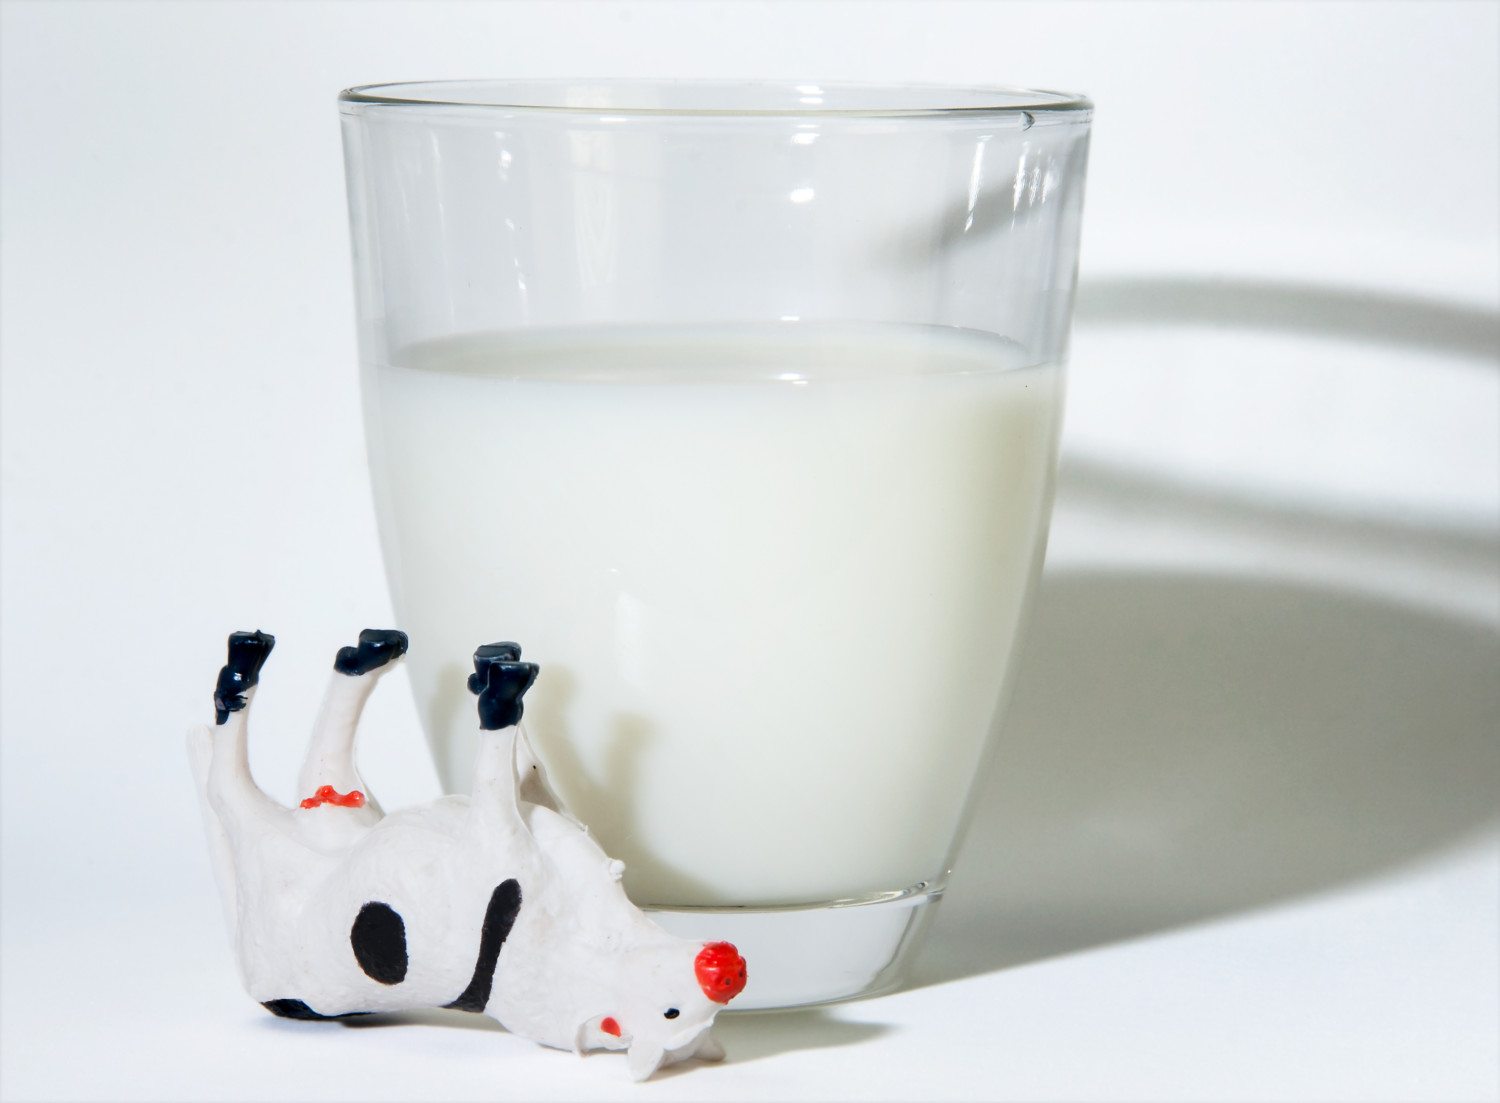 milk glass photo